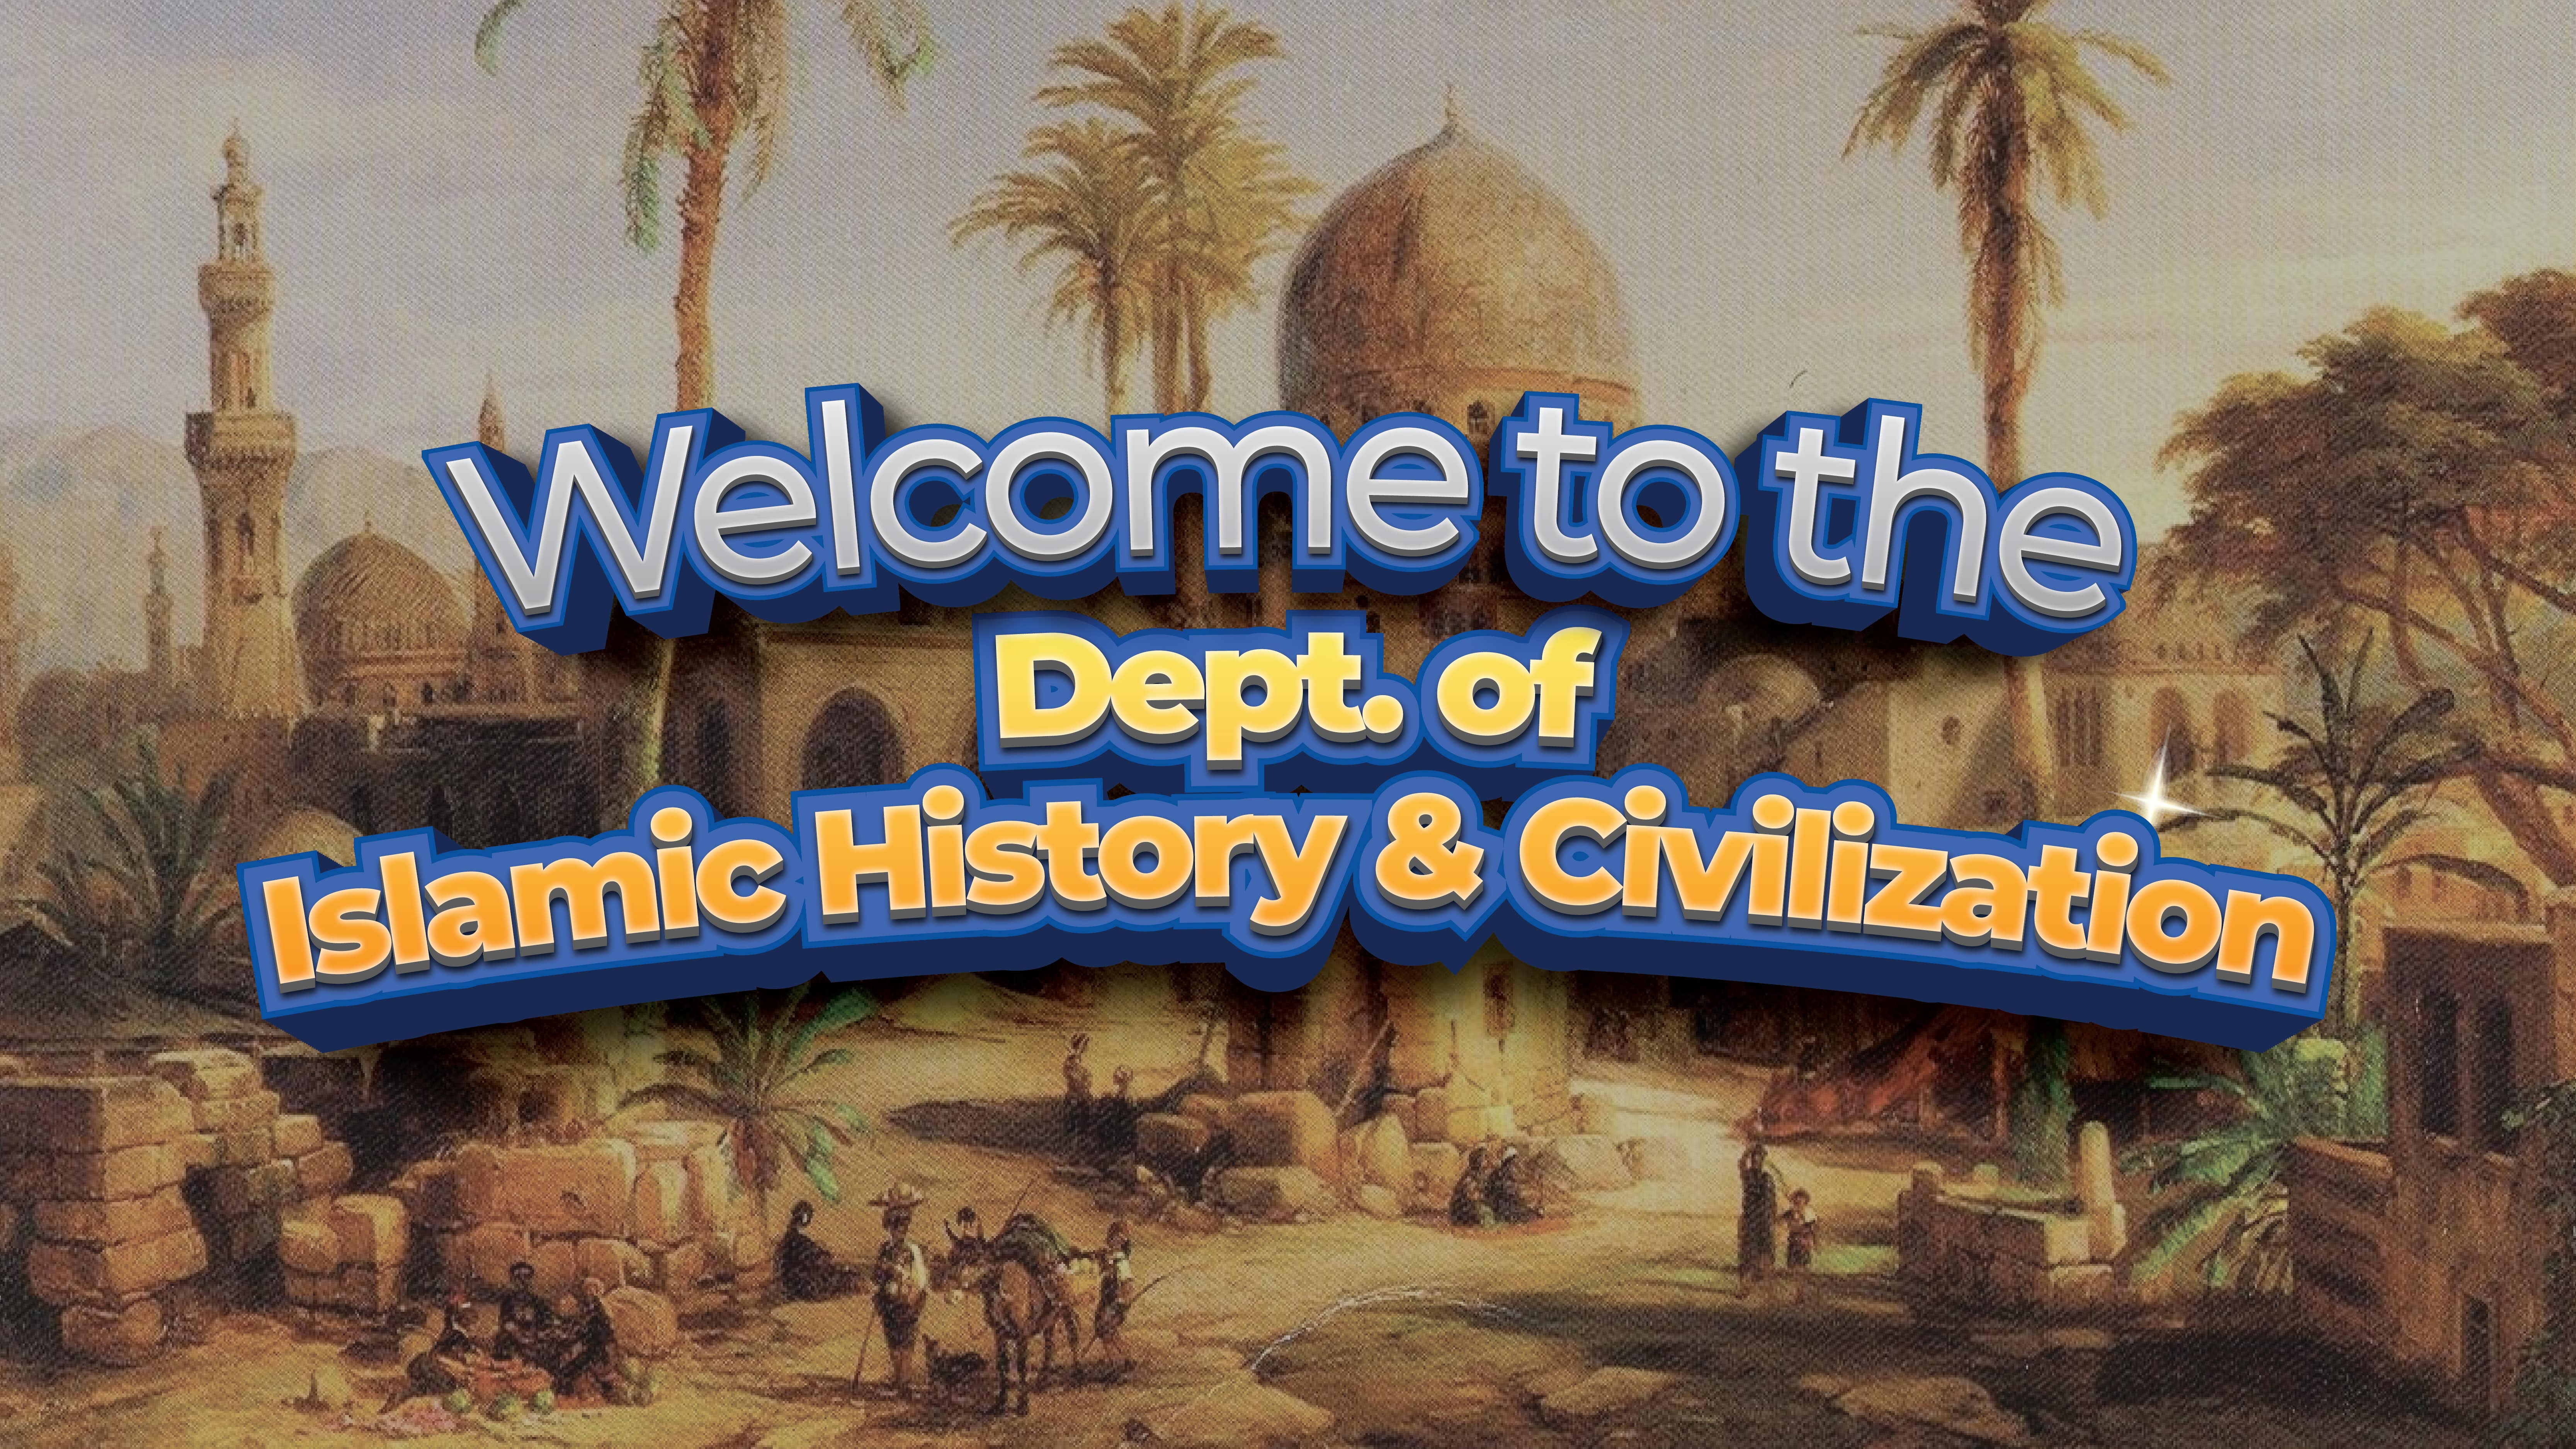 Islamic History and Civilization banner